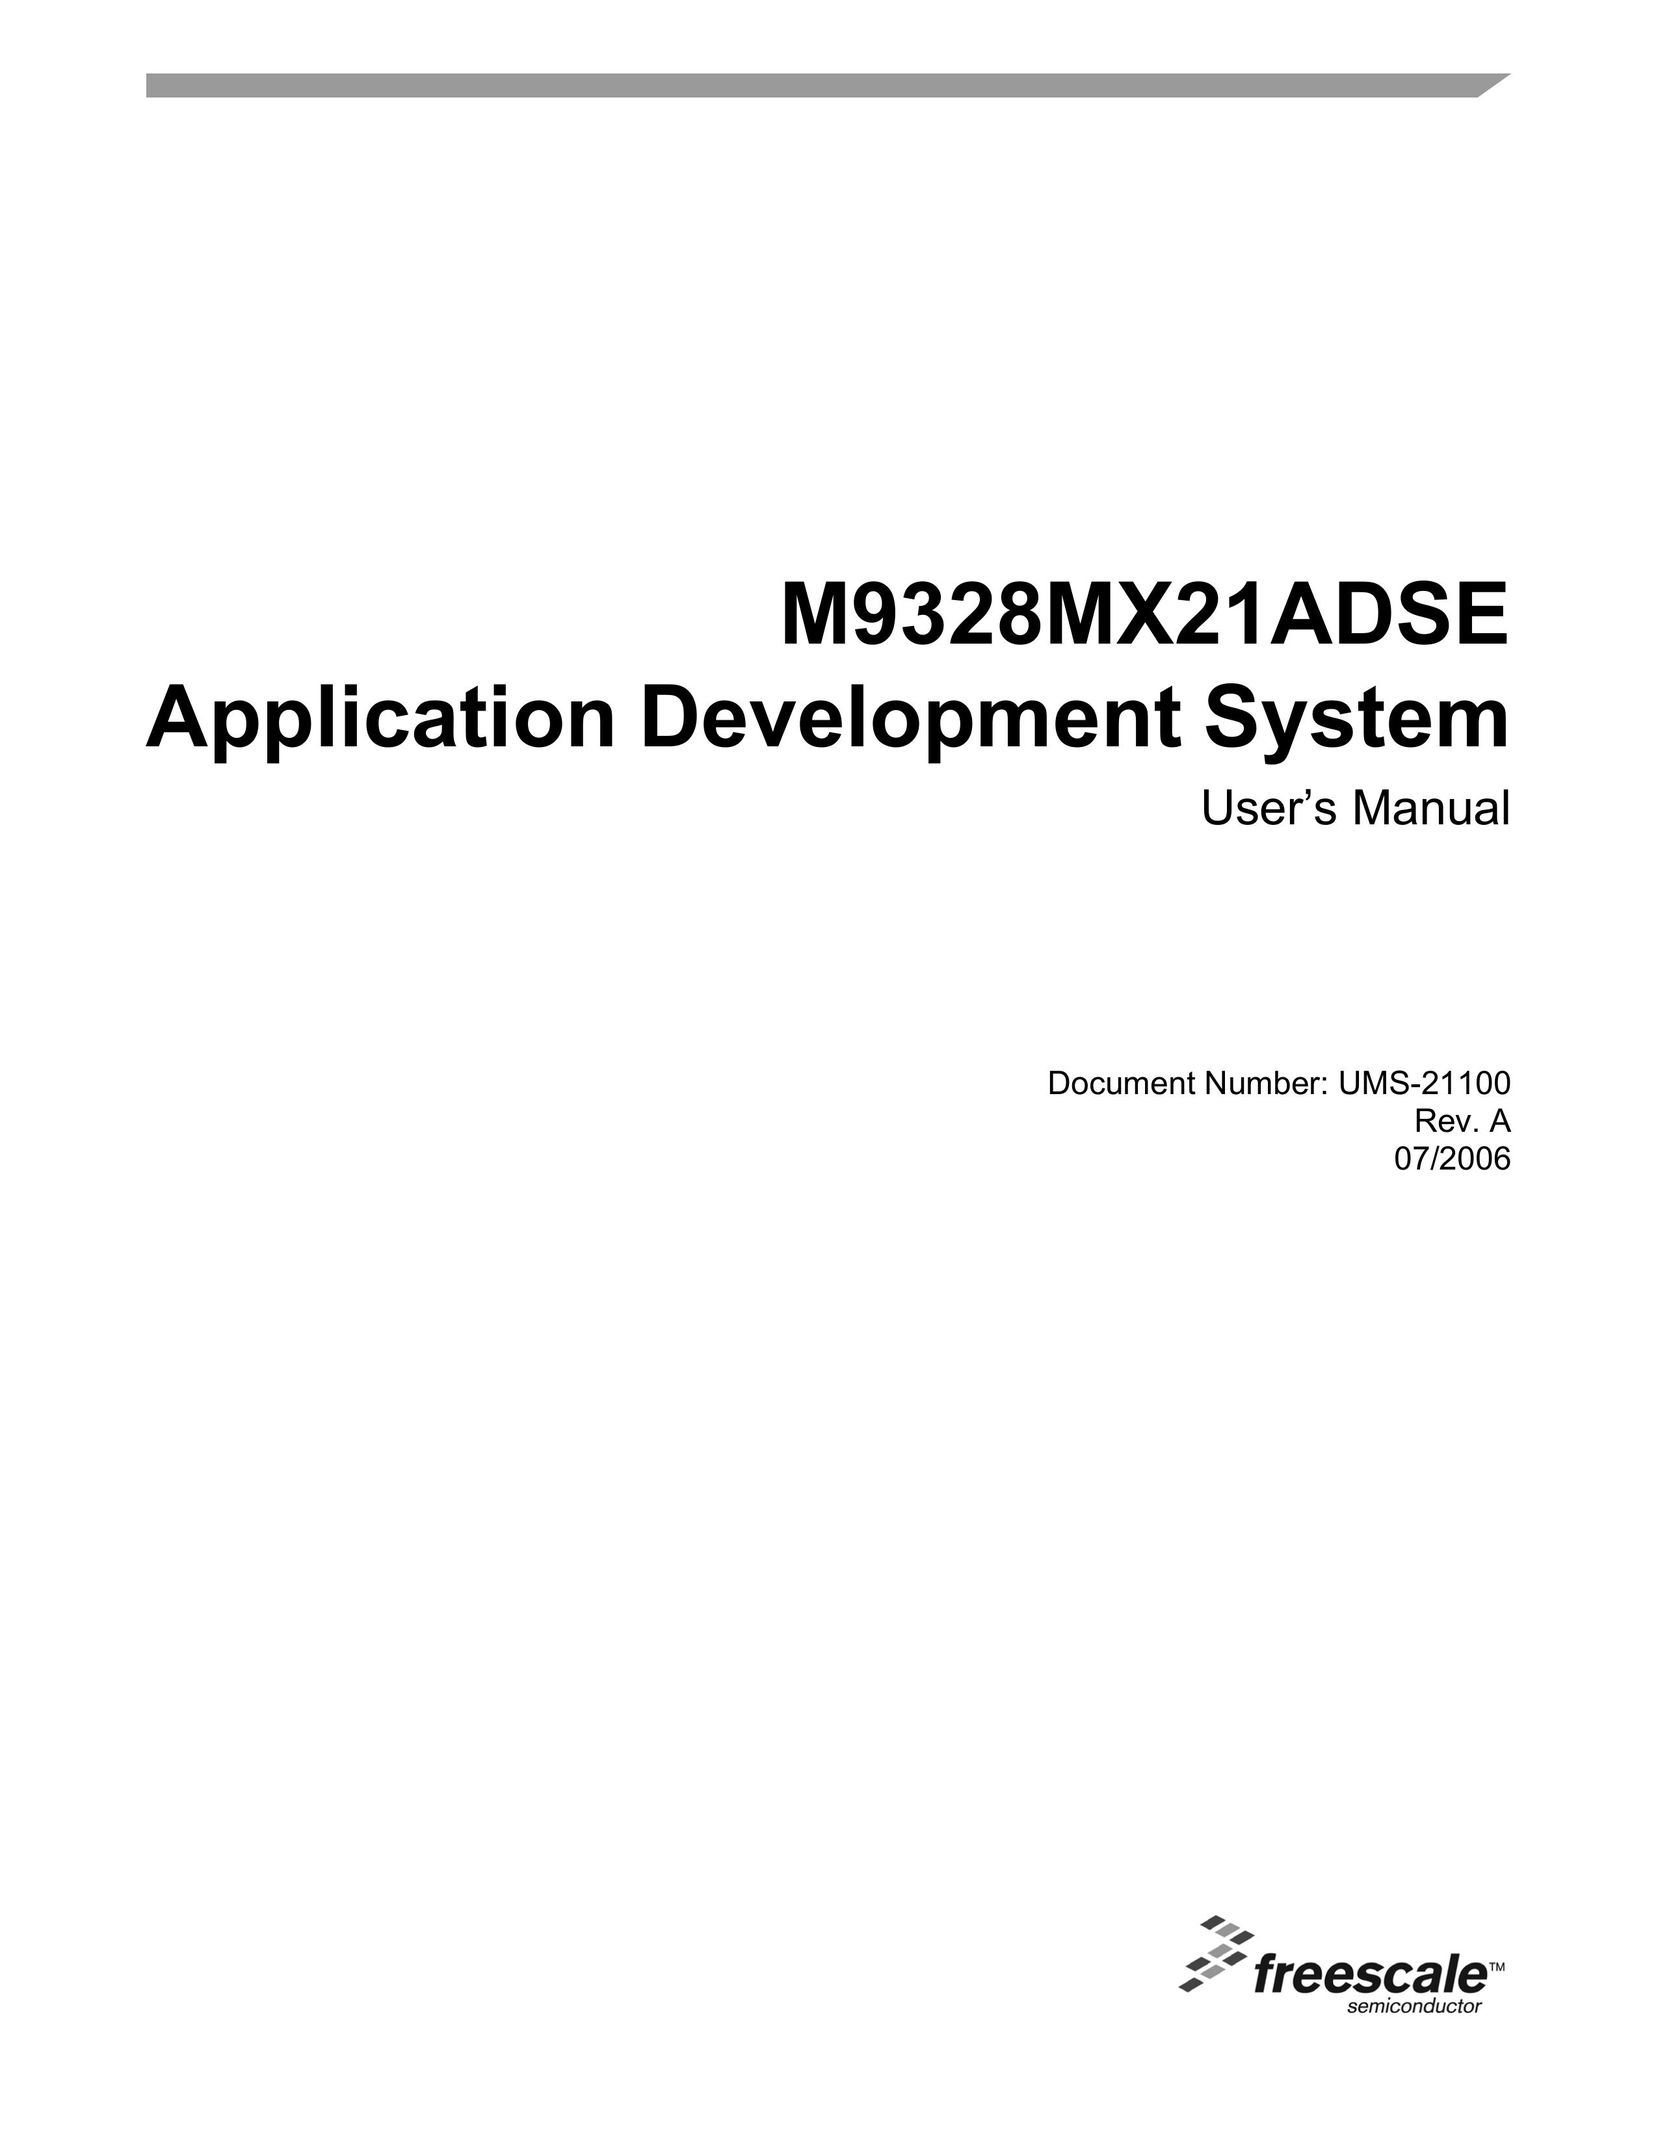 Freescale Semiconductor M9328MX21ADSE Switch User Manual